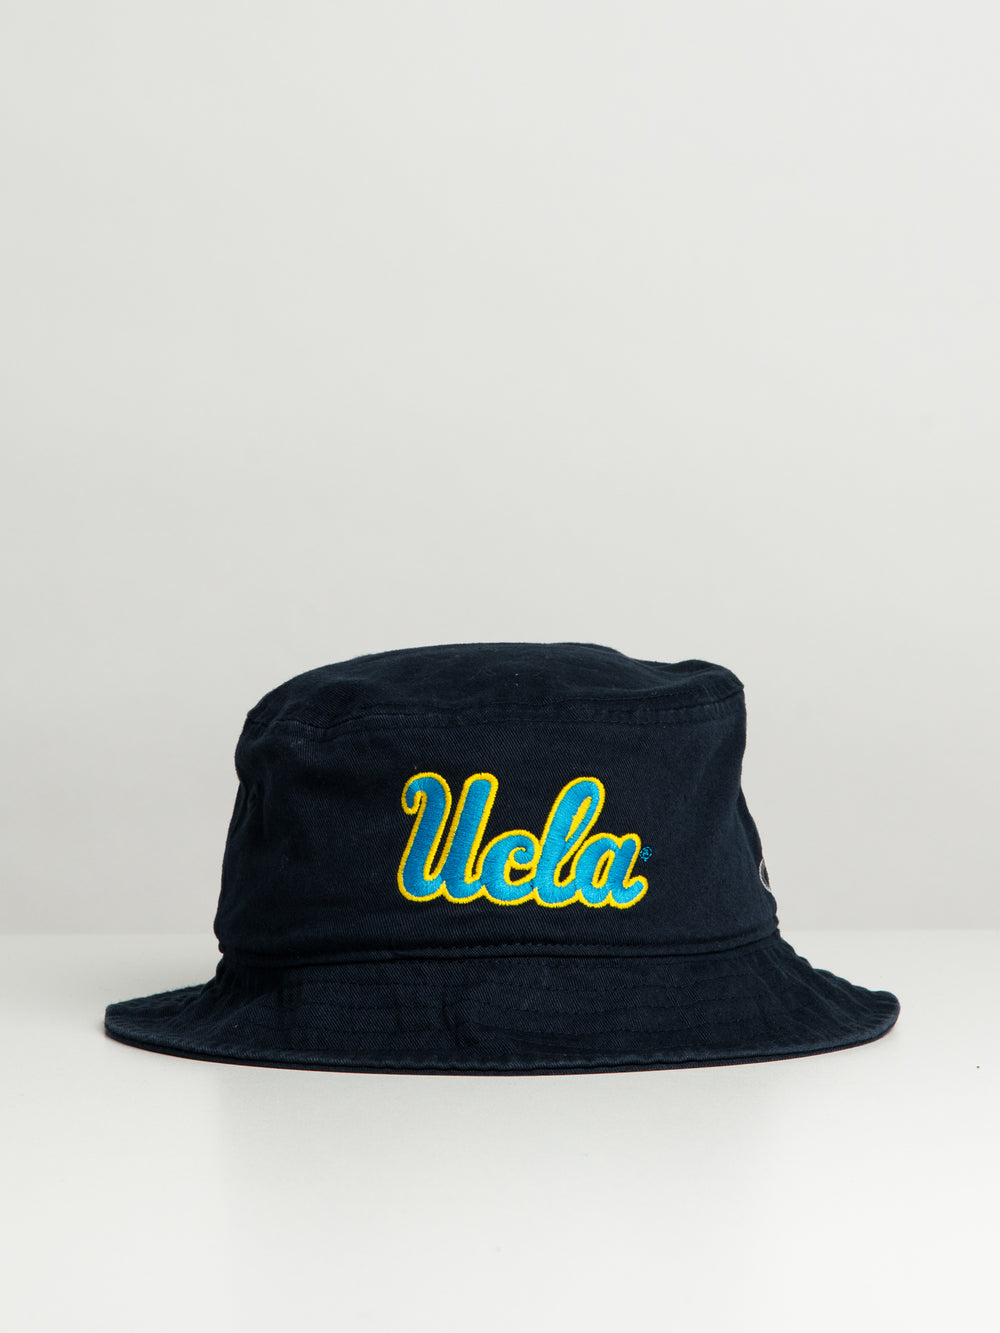 CHAMPION UCLA BUCKET HAT - CLEARANCE